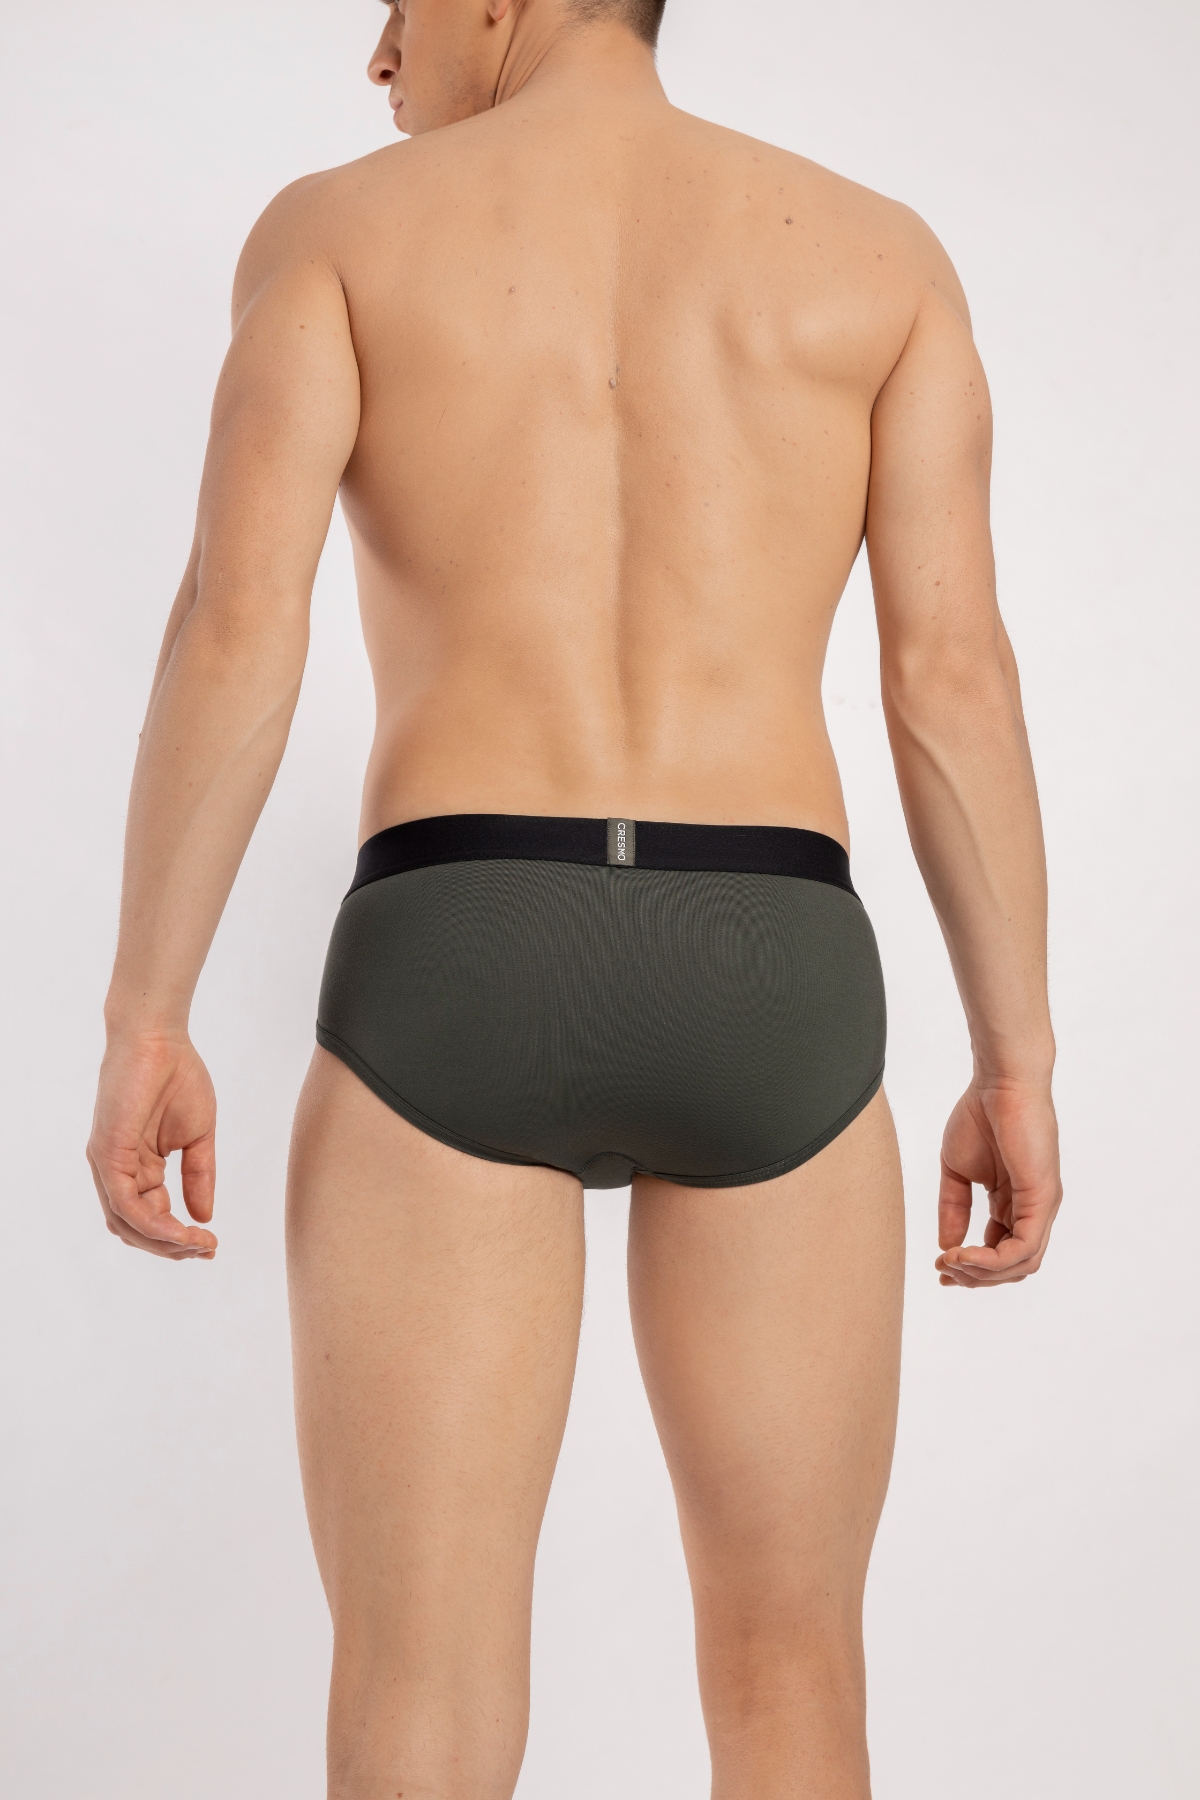 CRESMO | CRESMO Men's Luxury Anti-Microbial Micro Modal Underwear Breathable Ultra Soft Comfort Lightweight Brief 6